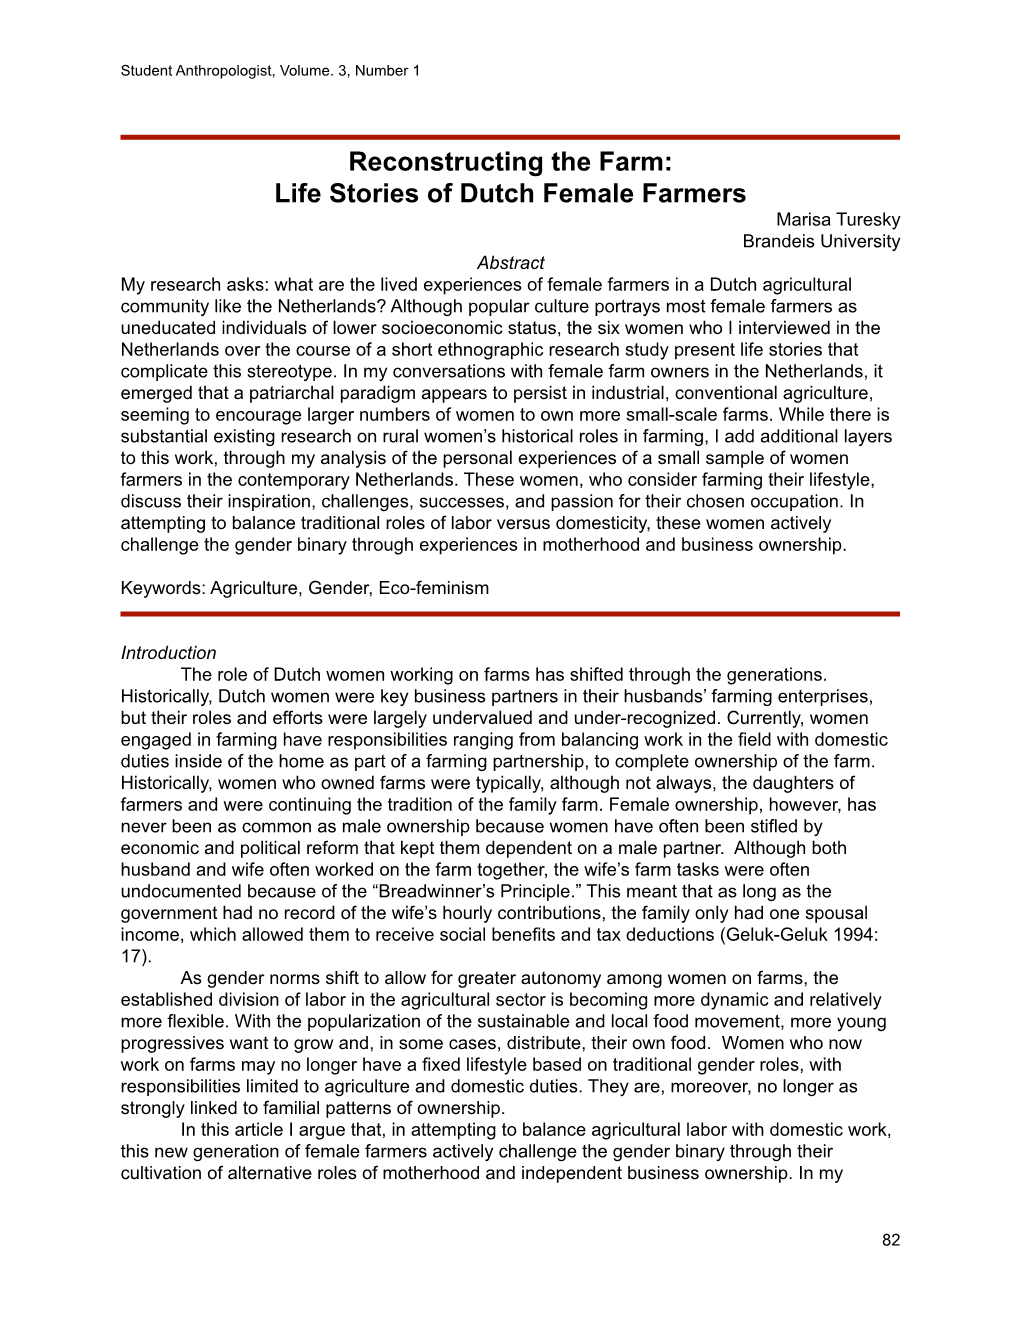 Reconstructing the Farm: Life Stories of Dutch Female Farmers